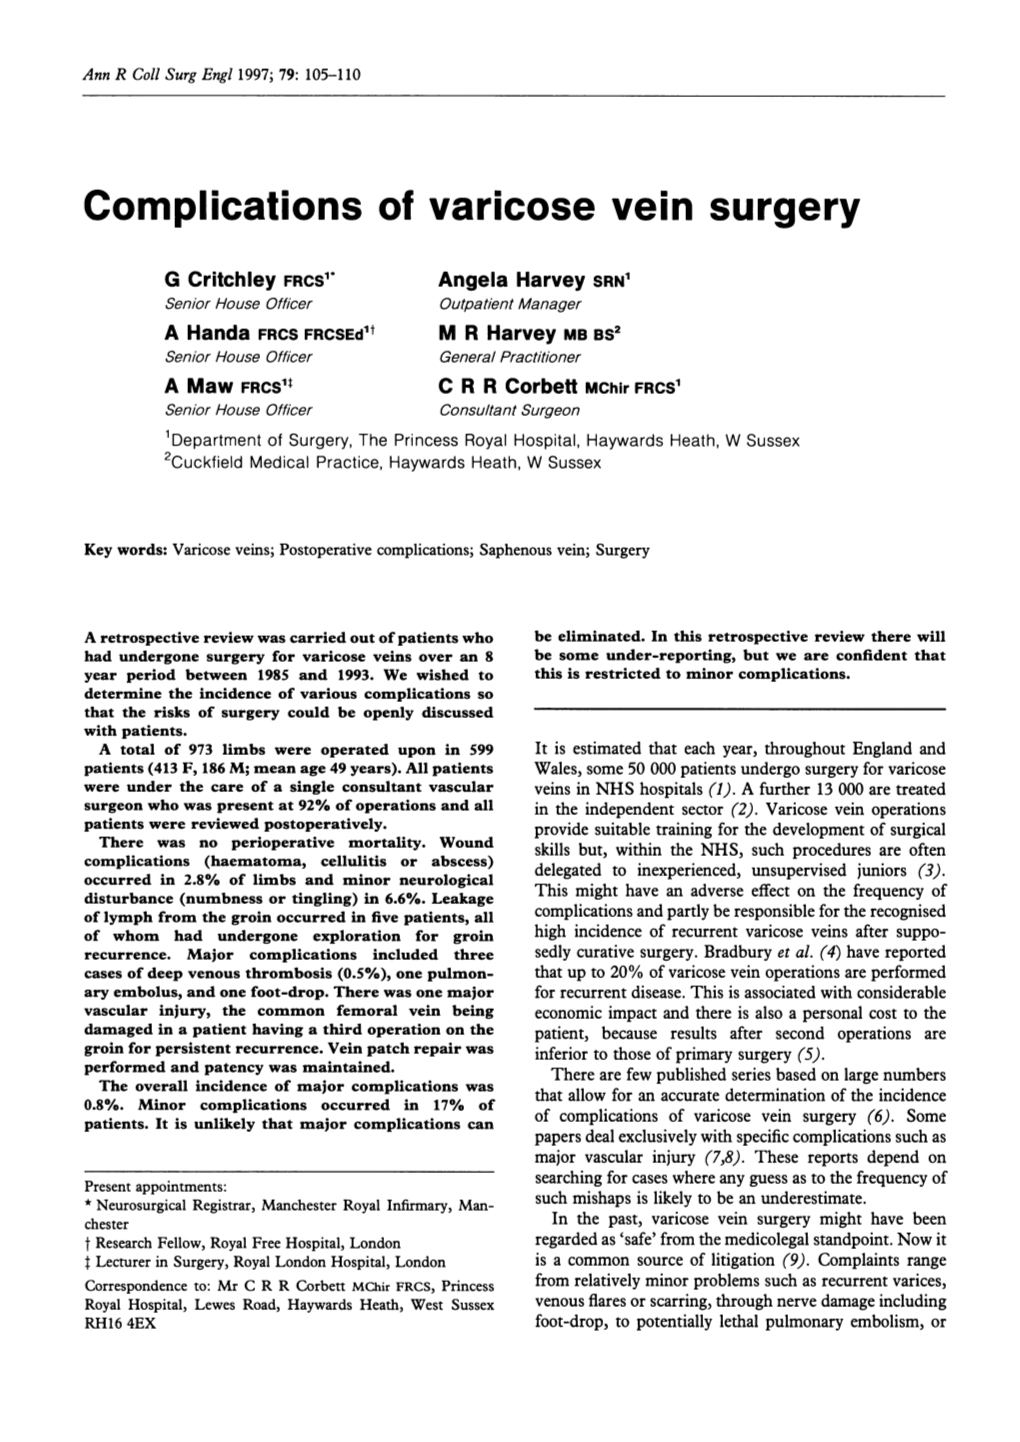 Complications of Varicose Vein Surgery